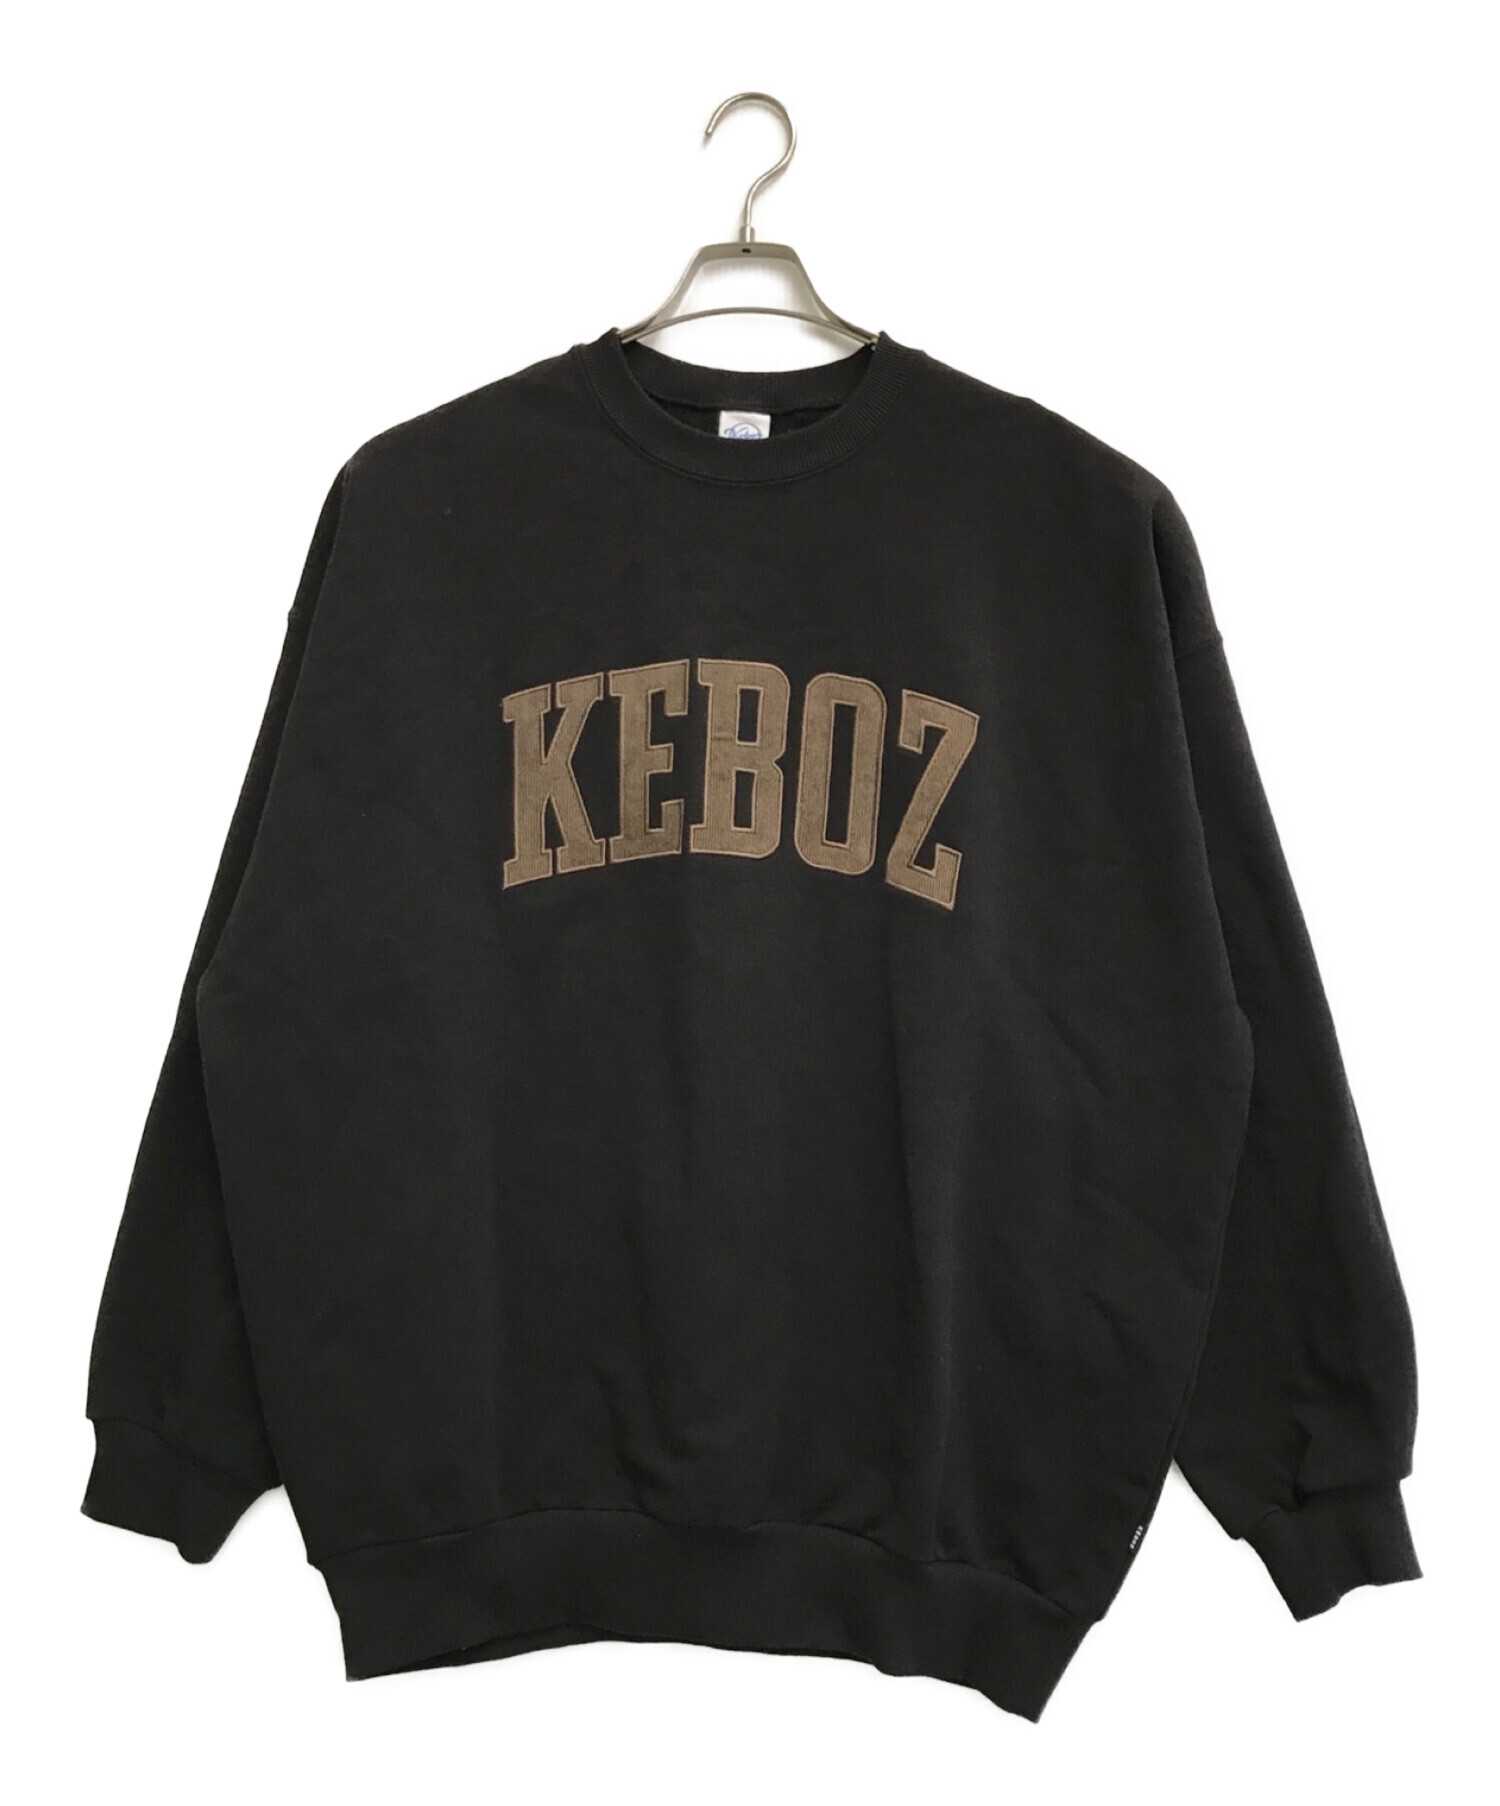 KEBOZ スウェット ブラック-